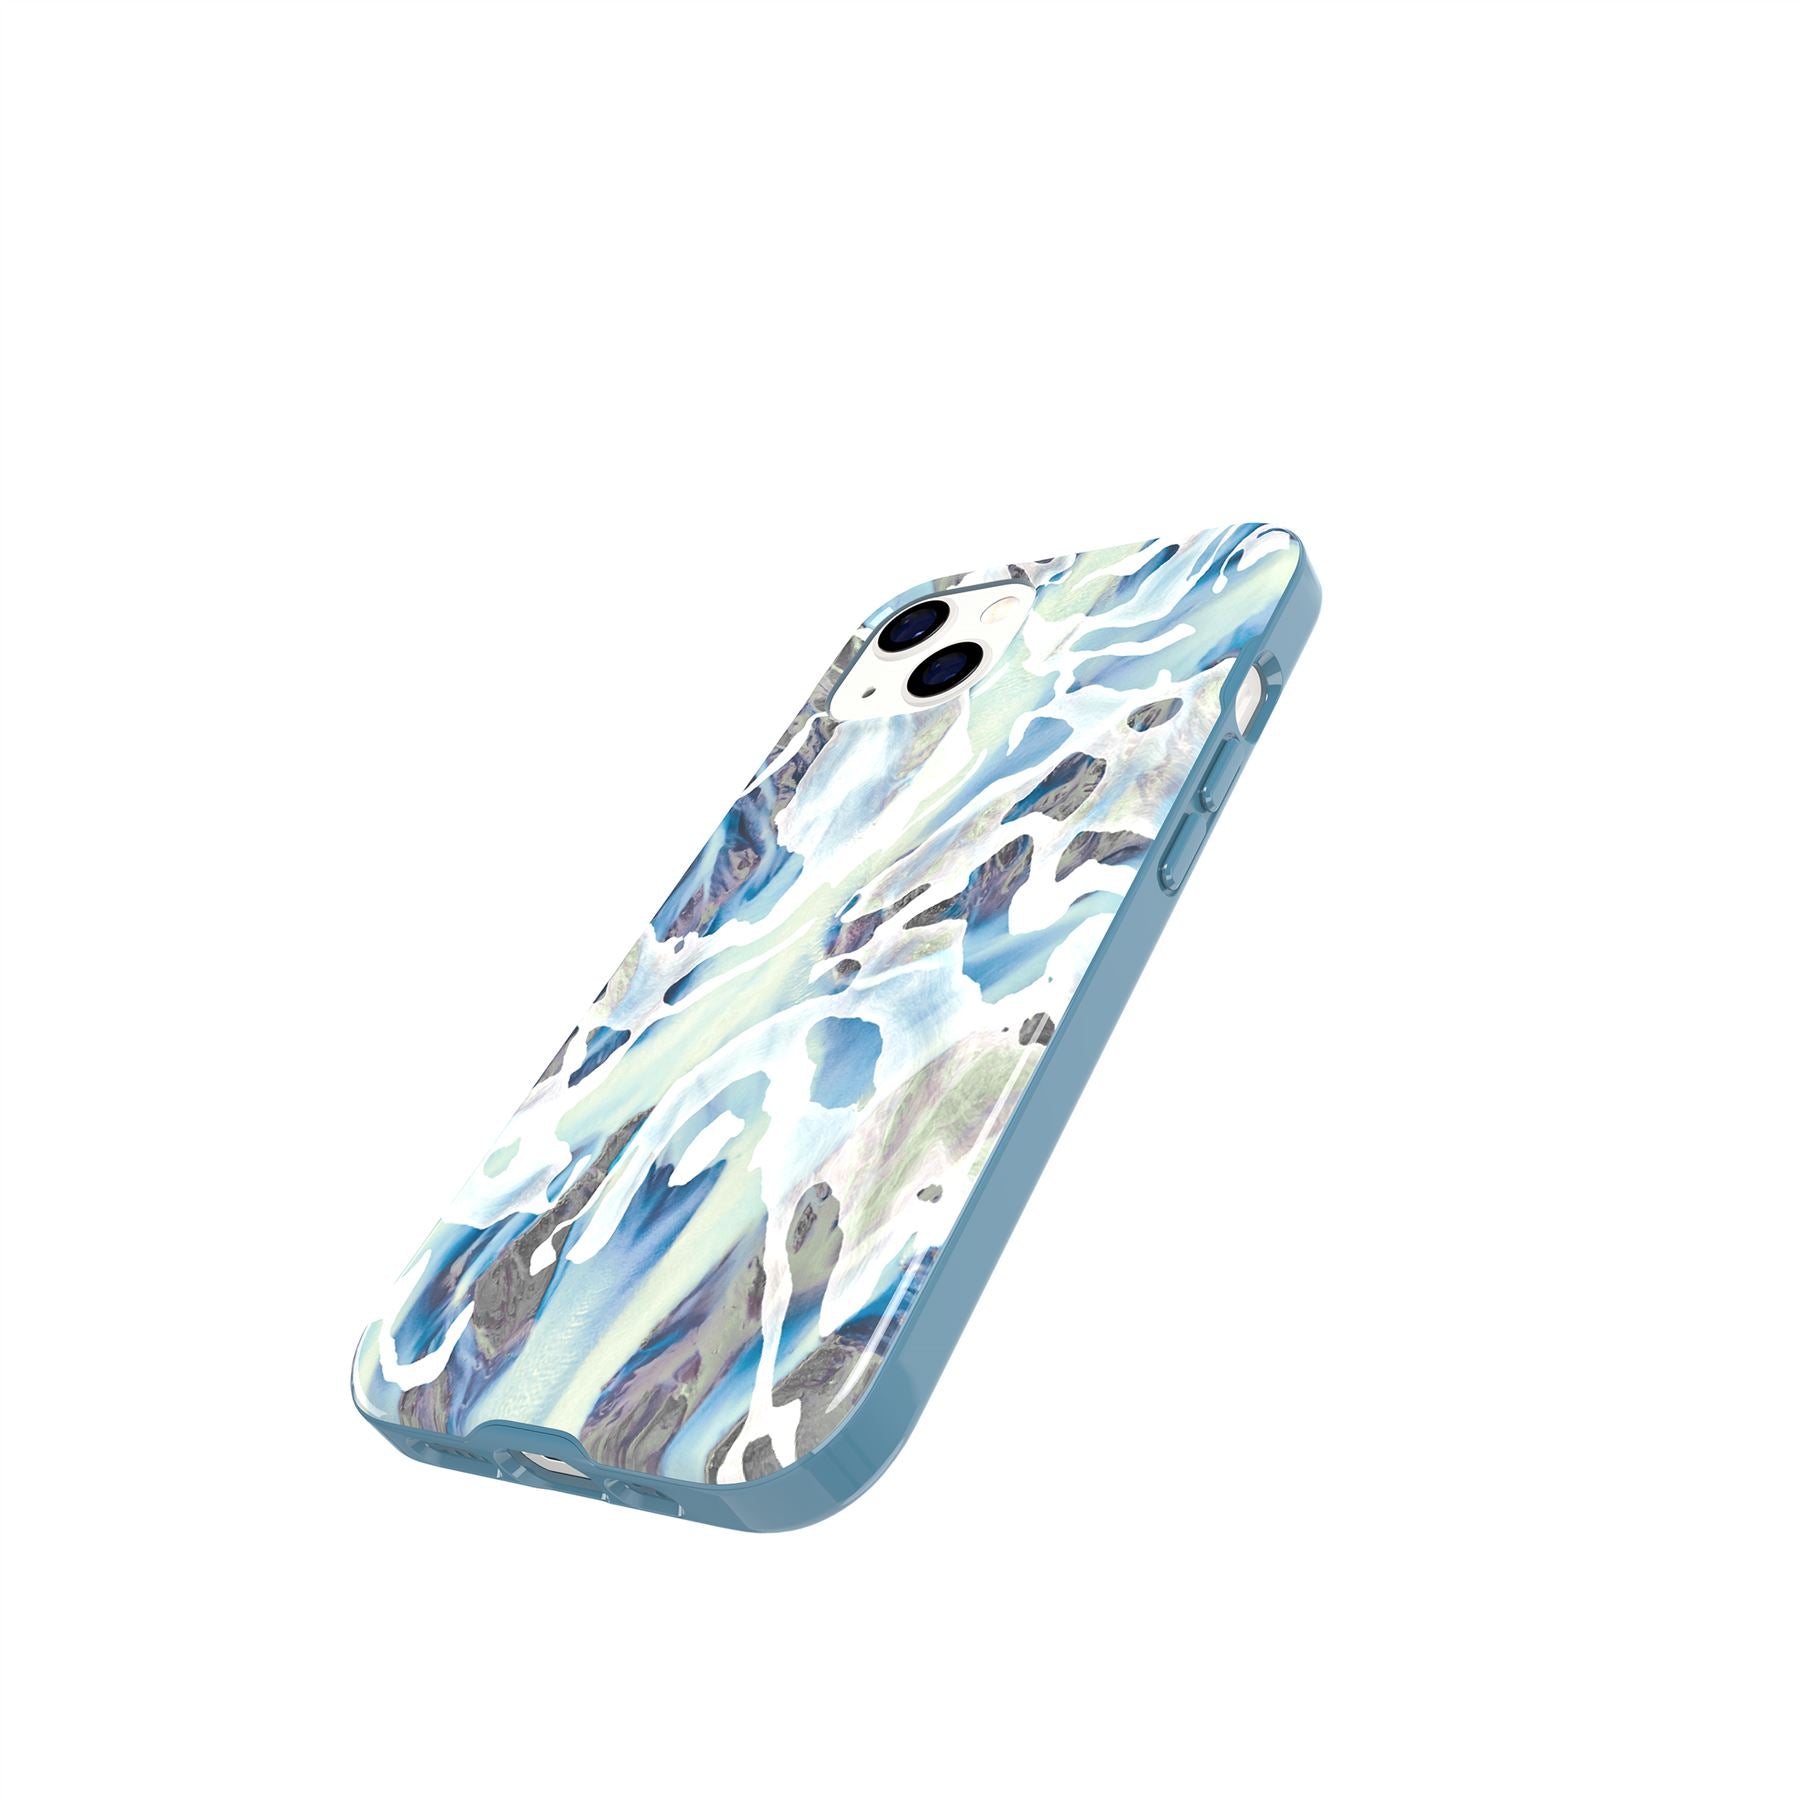 Evo Art - Apple iPhone 13 Case - Frozen River